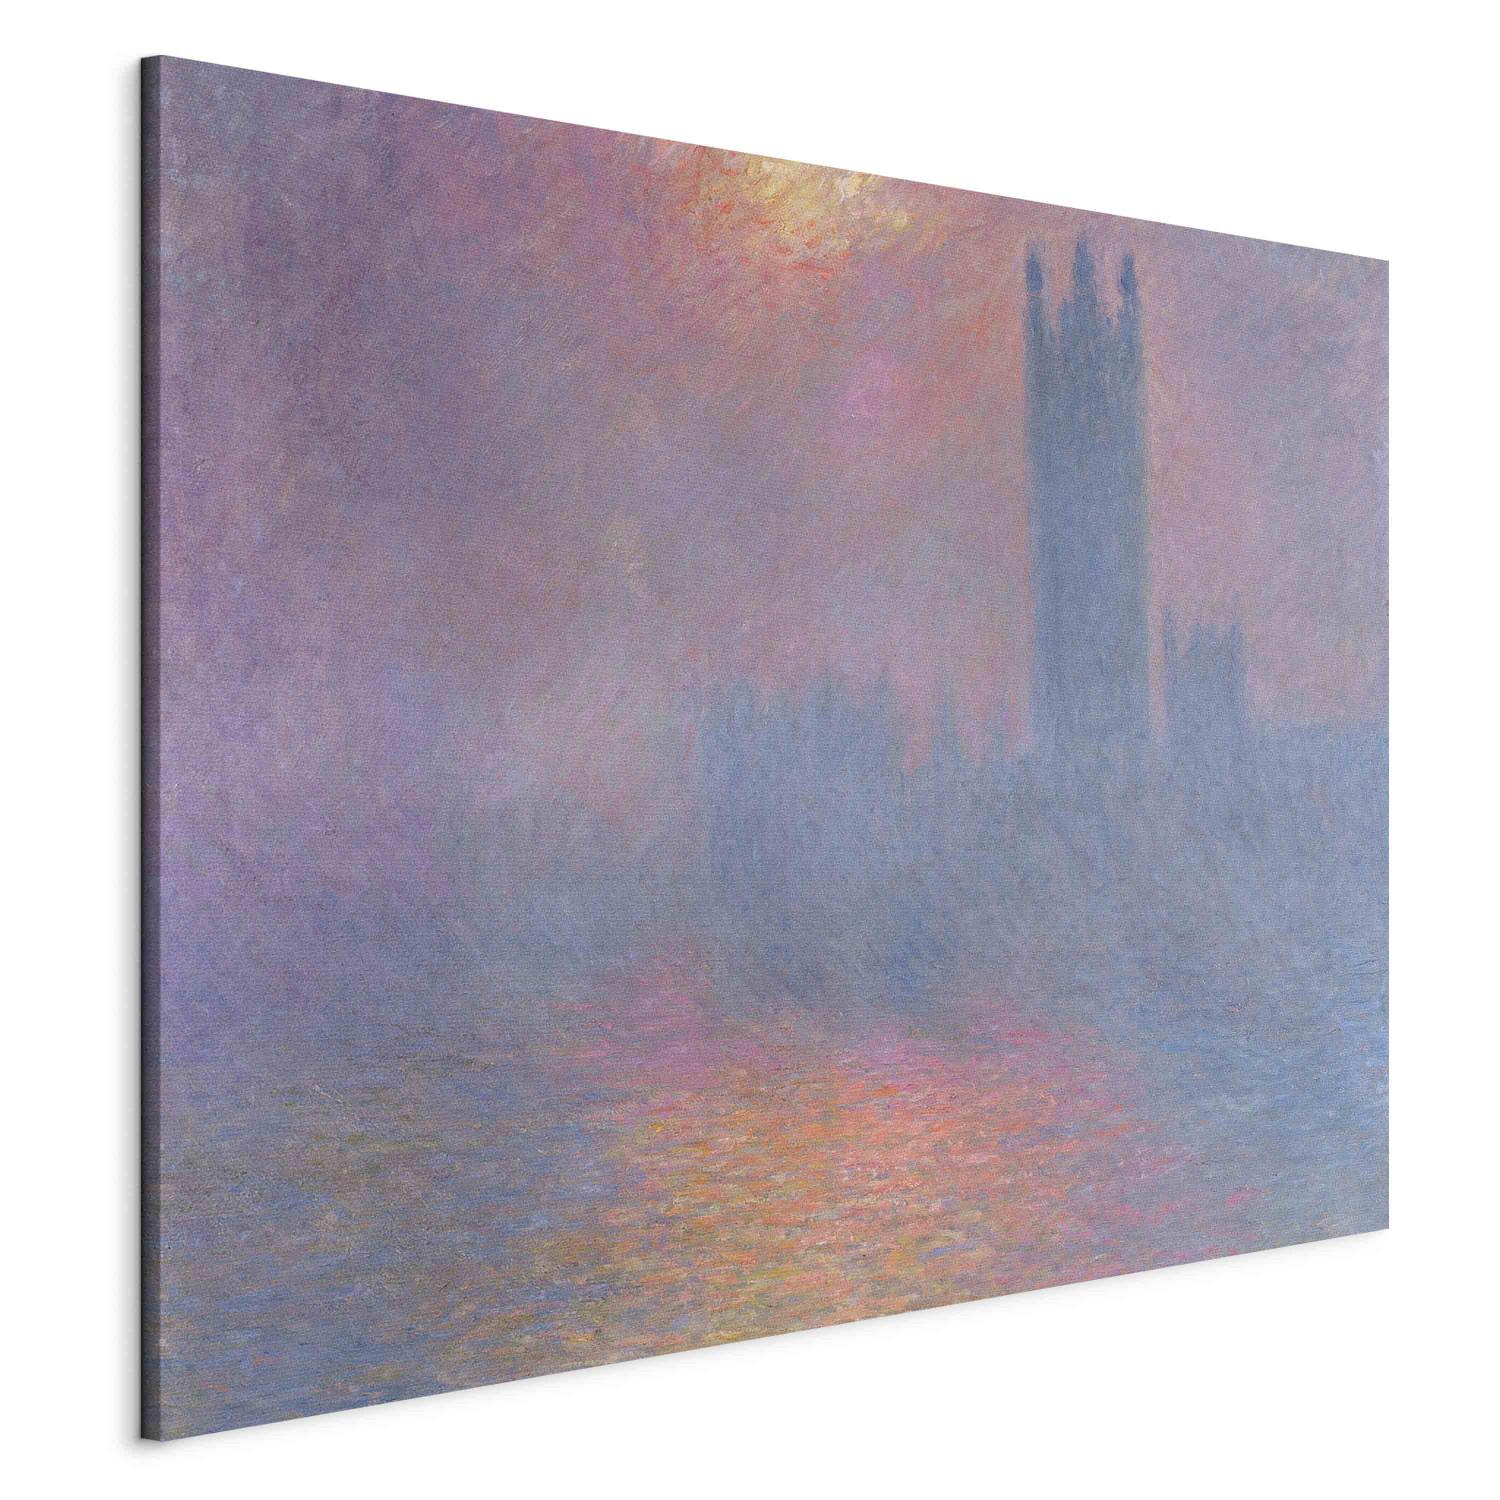 Réplica de pintura The Houses of Parliament, London, with the sun breaking through the fog